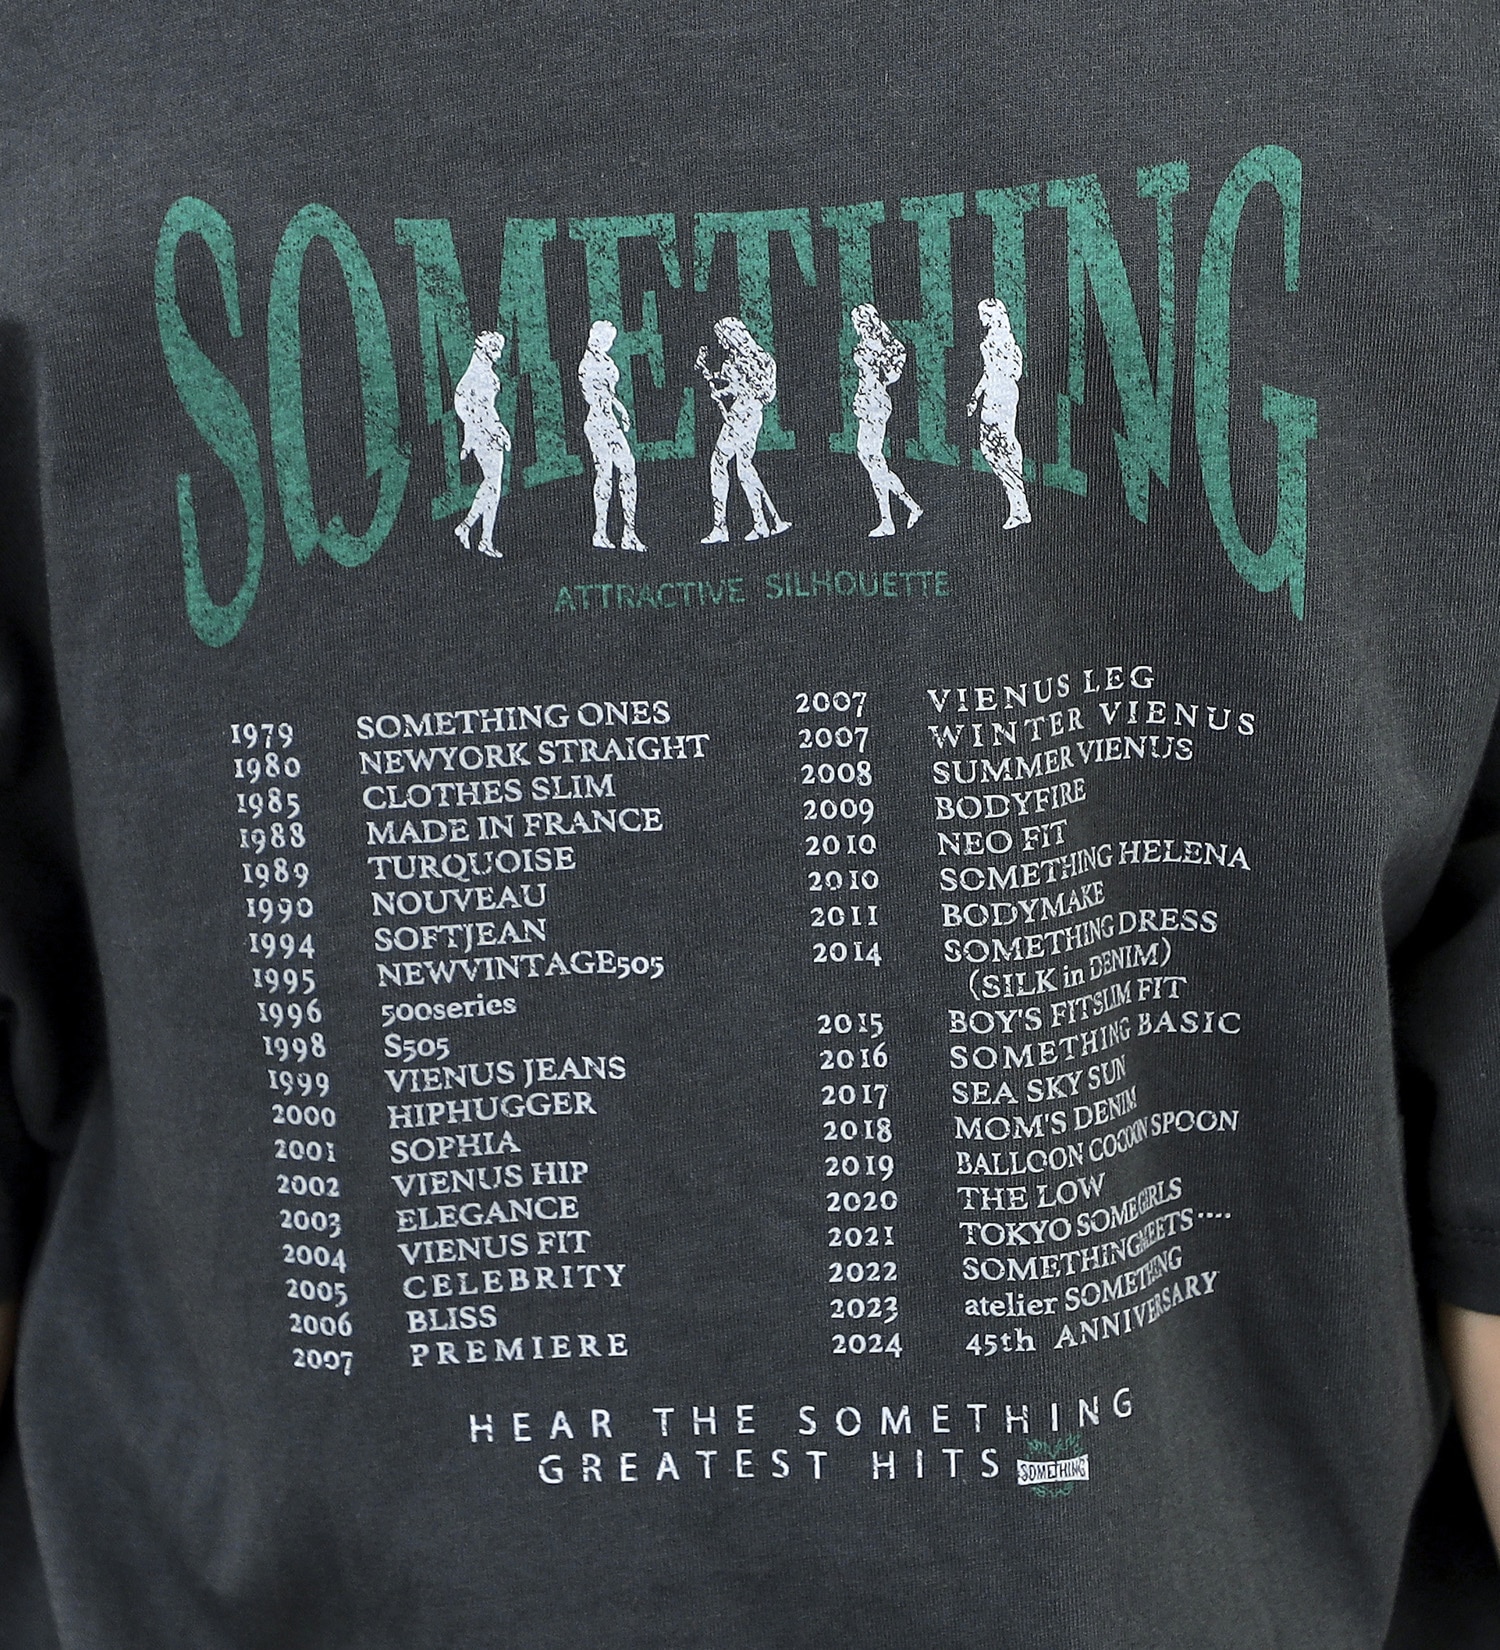 SOMETHING(サムシング)のSOMETHING ロックTシャツ|トップス/Tシャツ/カットソー/レディース|チャコールグレー